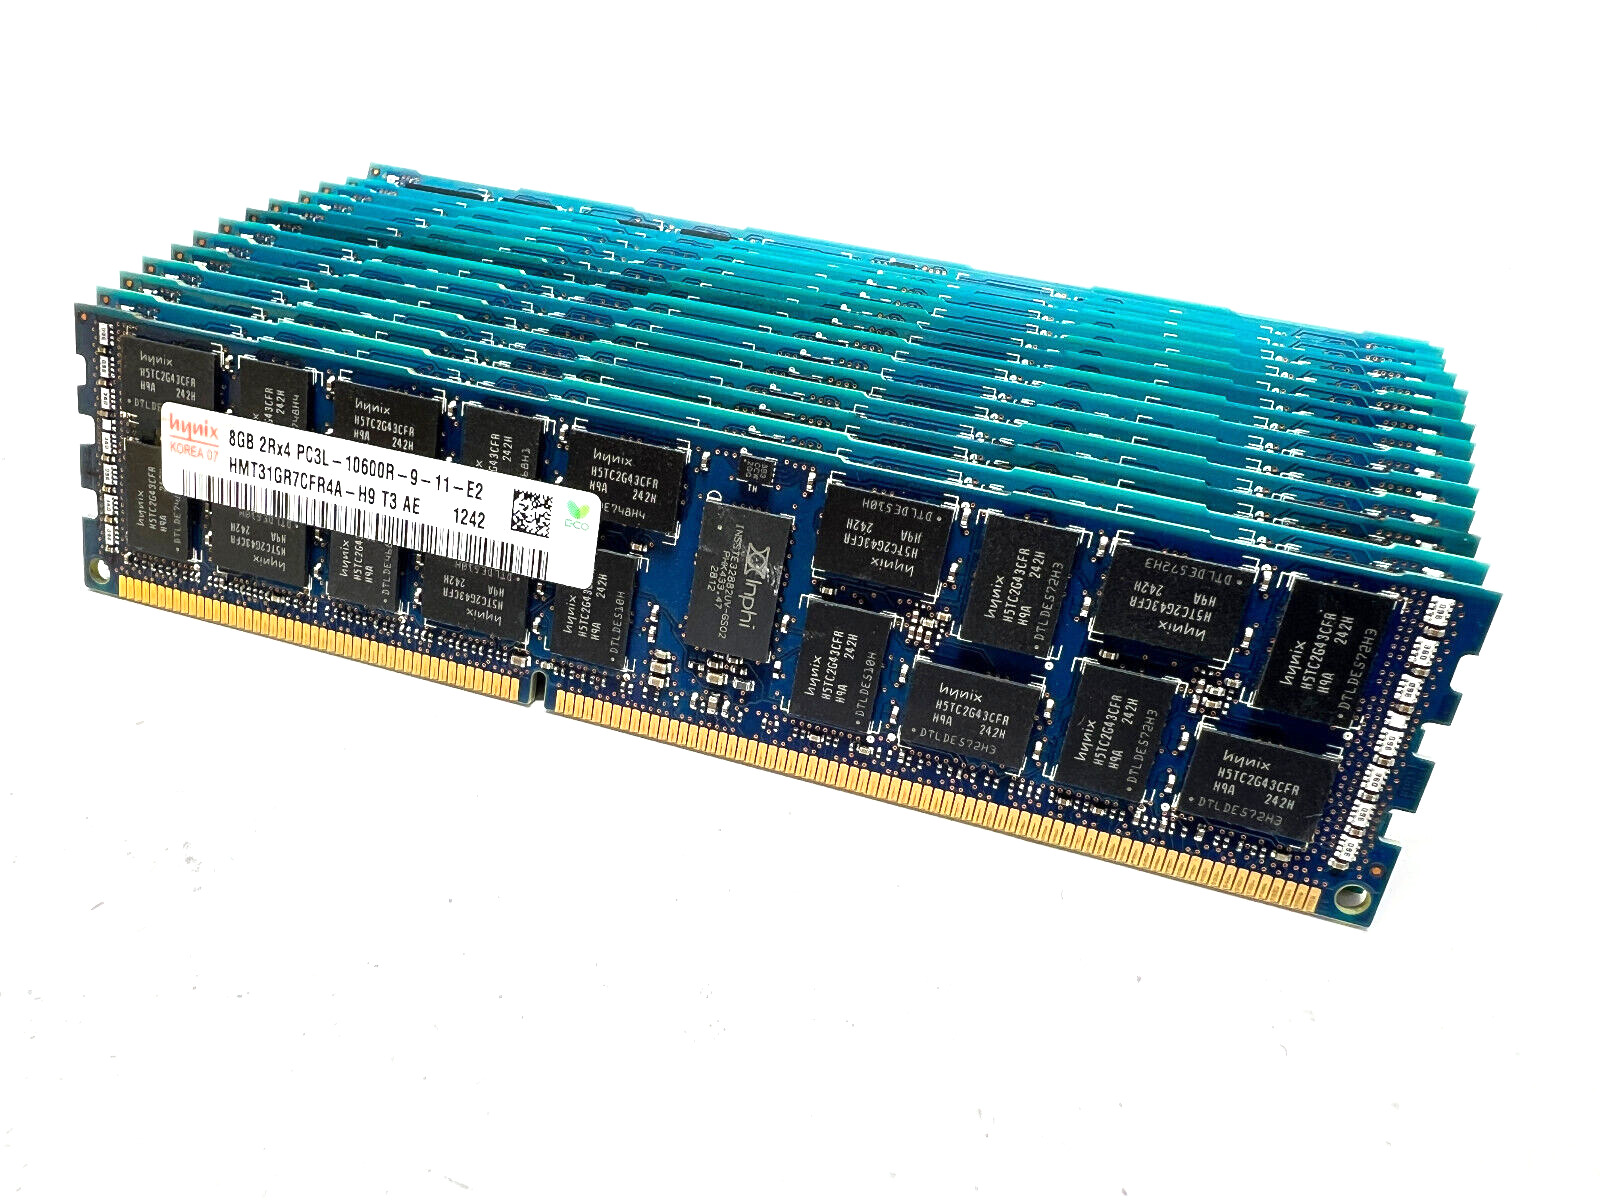 LOT of 16x (128GB) SKHynix HMT31GR7EFR4A-H9 8GB PC-10600R DDR3 ECC Server RAM